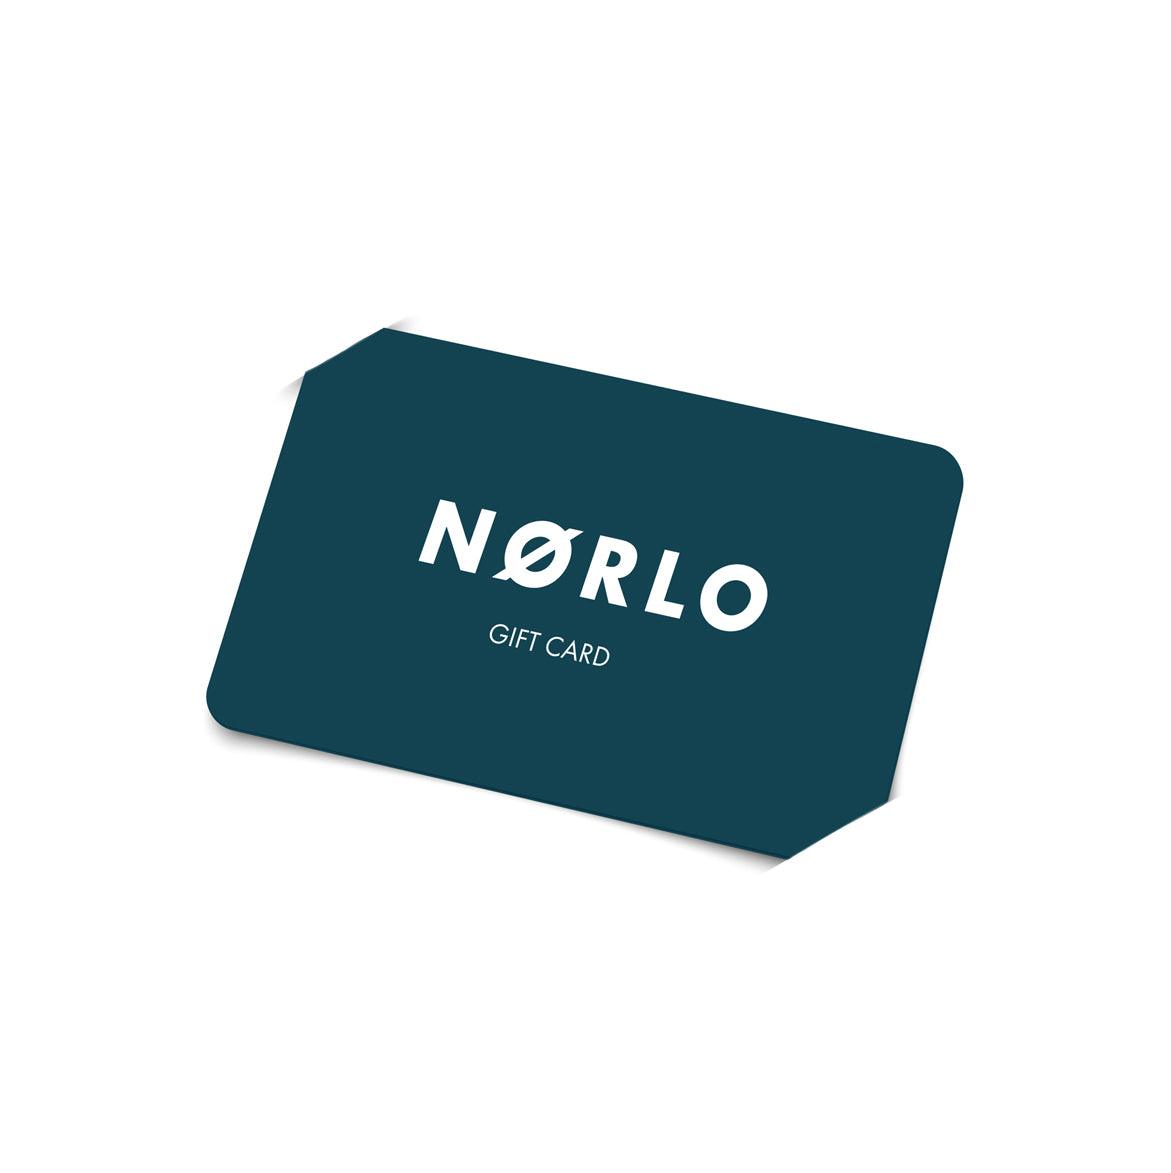 Gift Card - NORLO